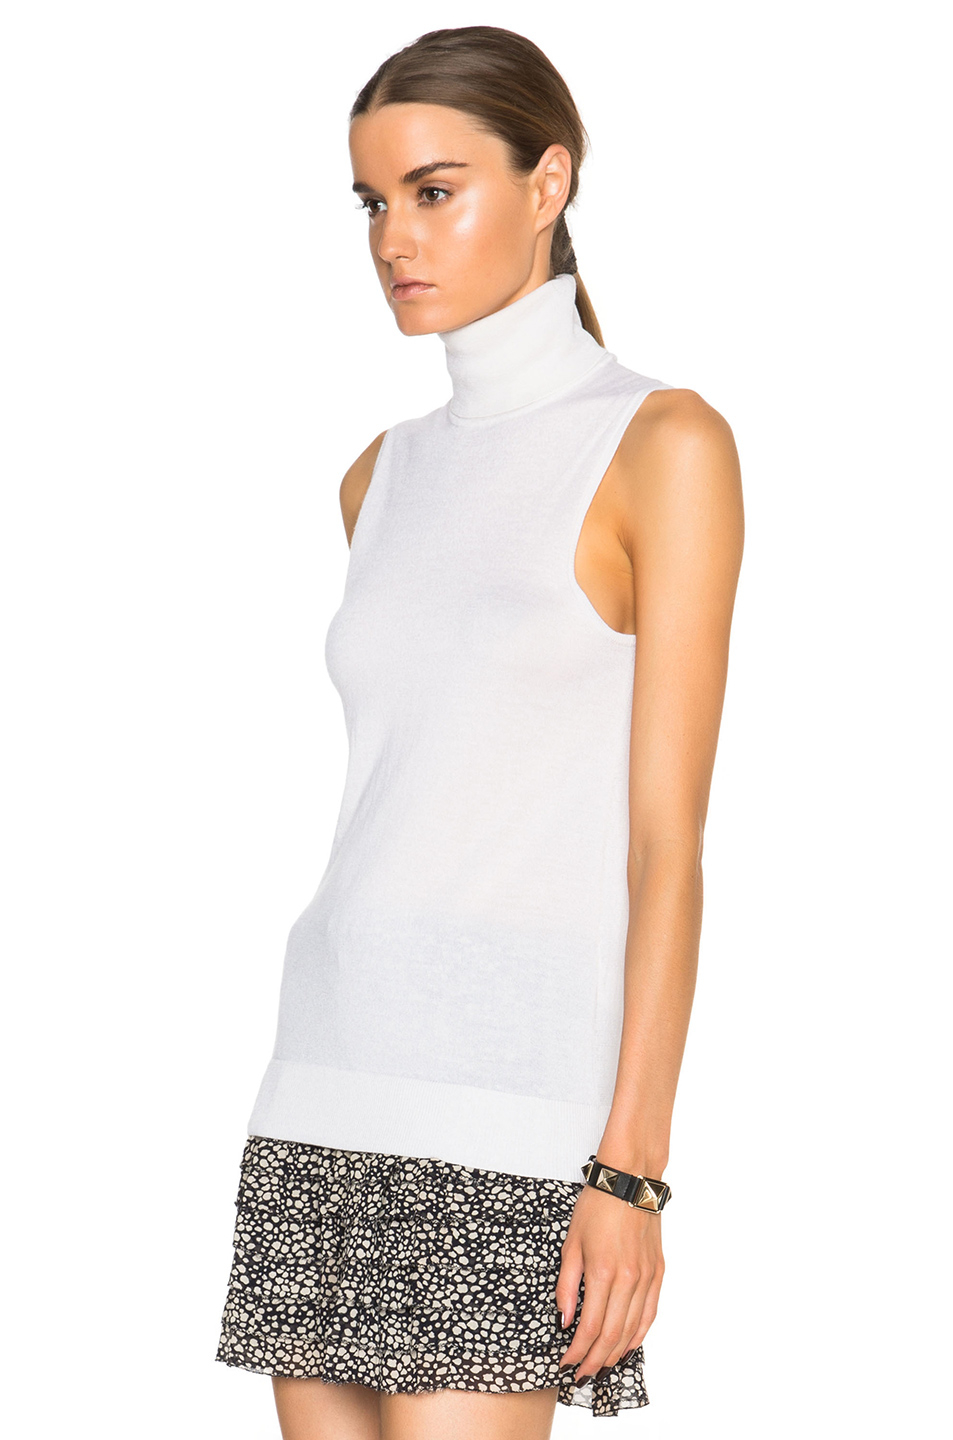 Equipment Cashmere Bette Sleeveless Turtleneck Sweater in White - Lyst